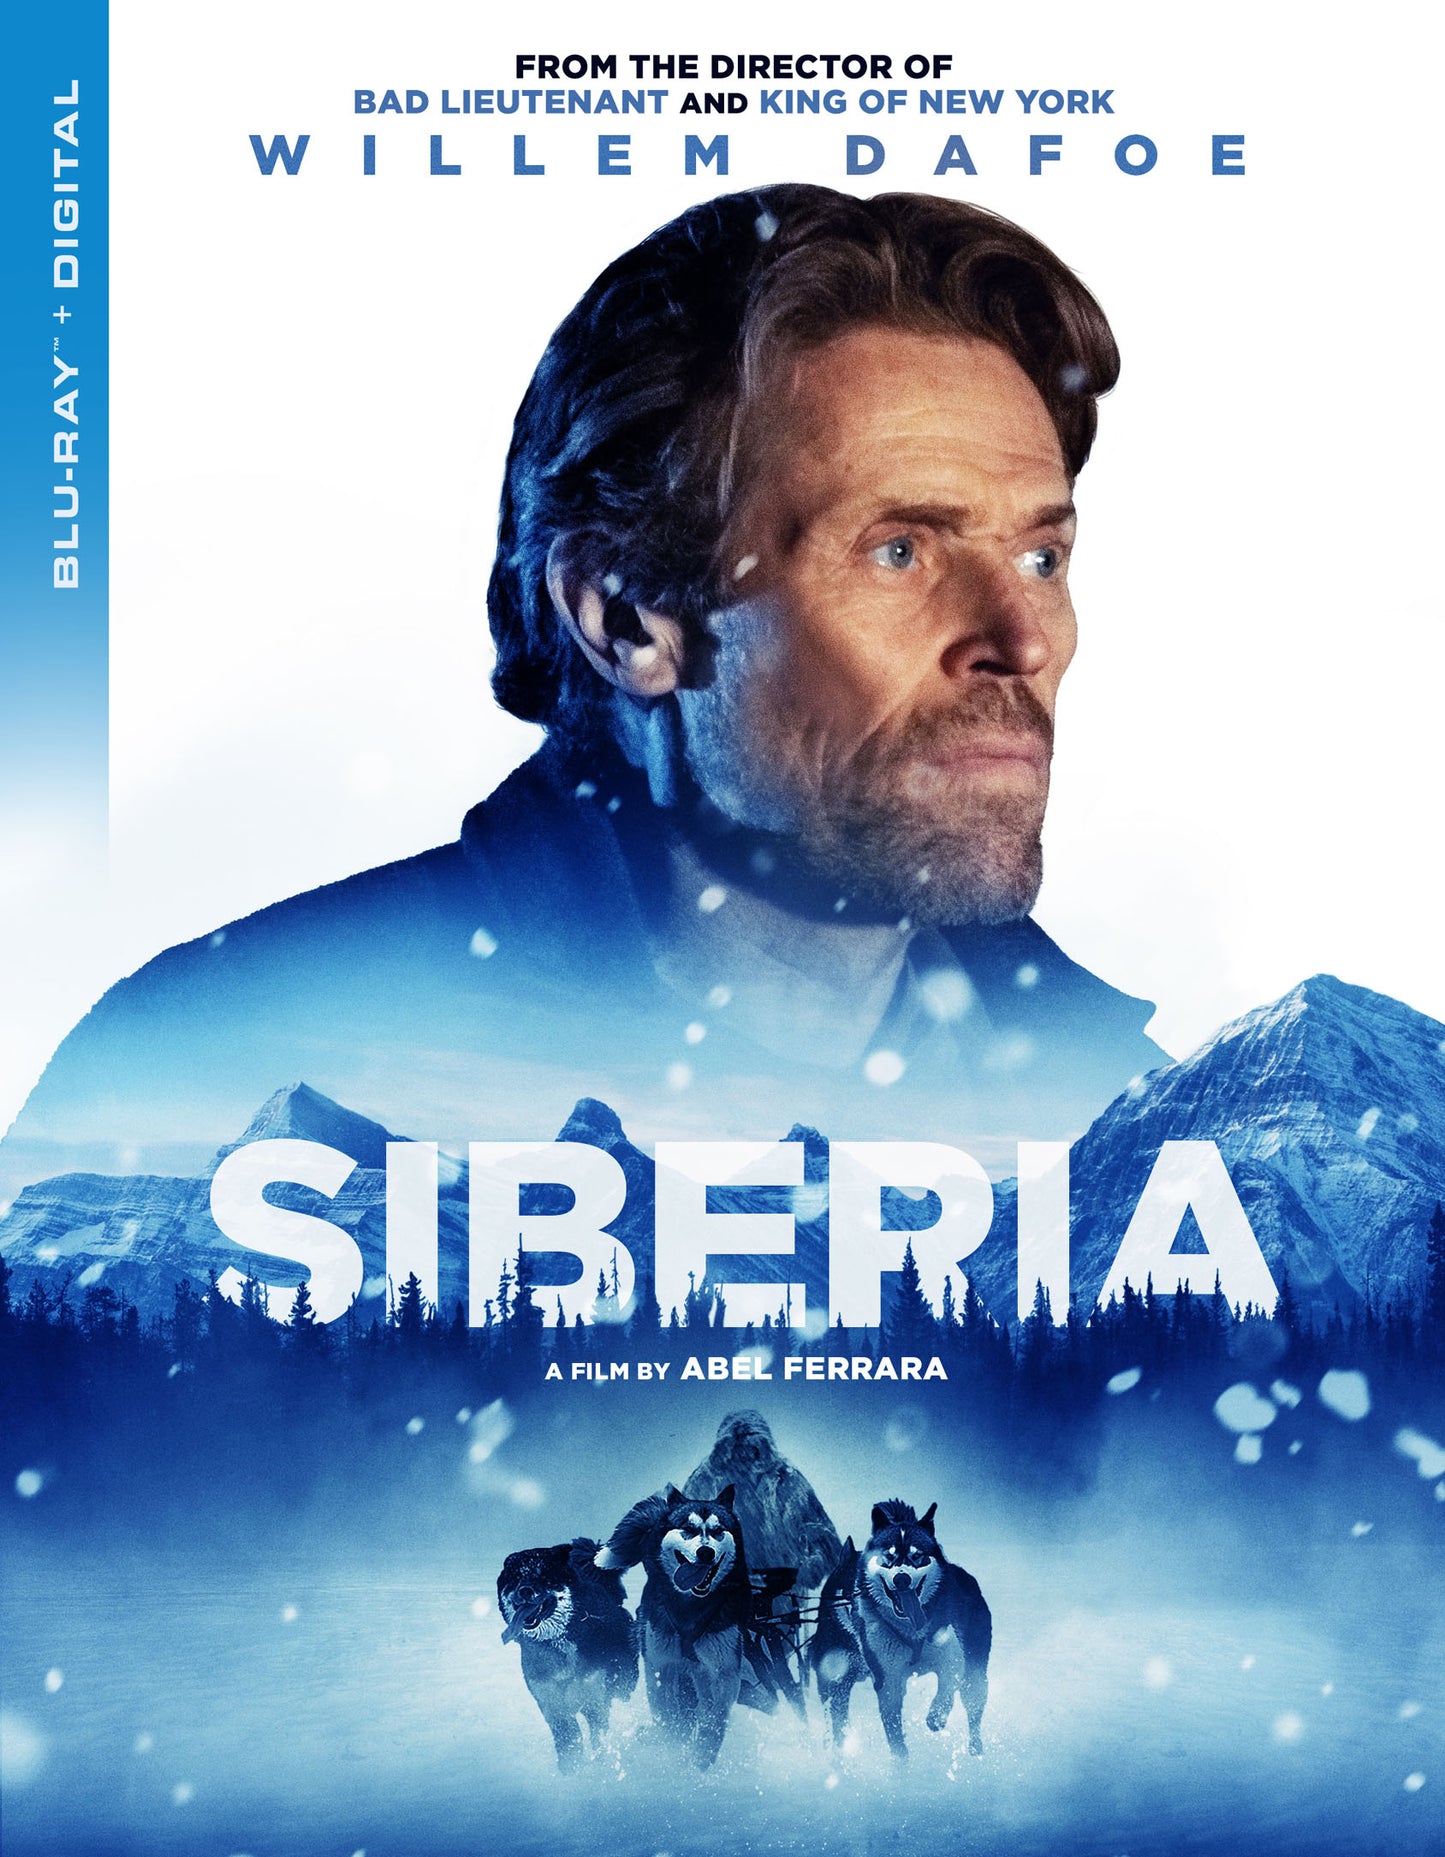 Siberia [Includes Digital Copy] [Blu-ray] cover art